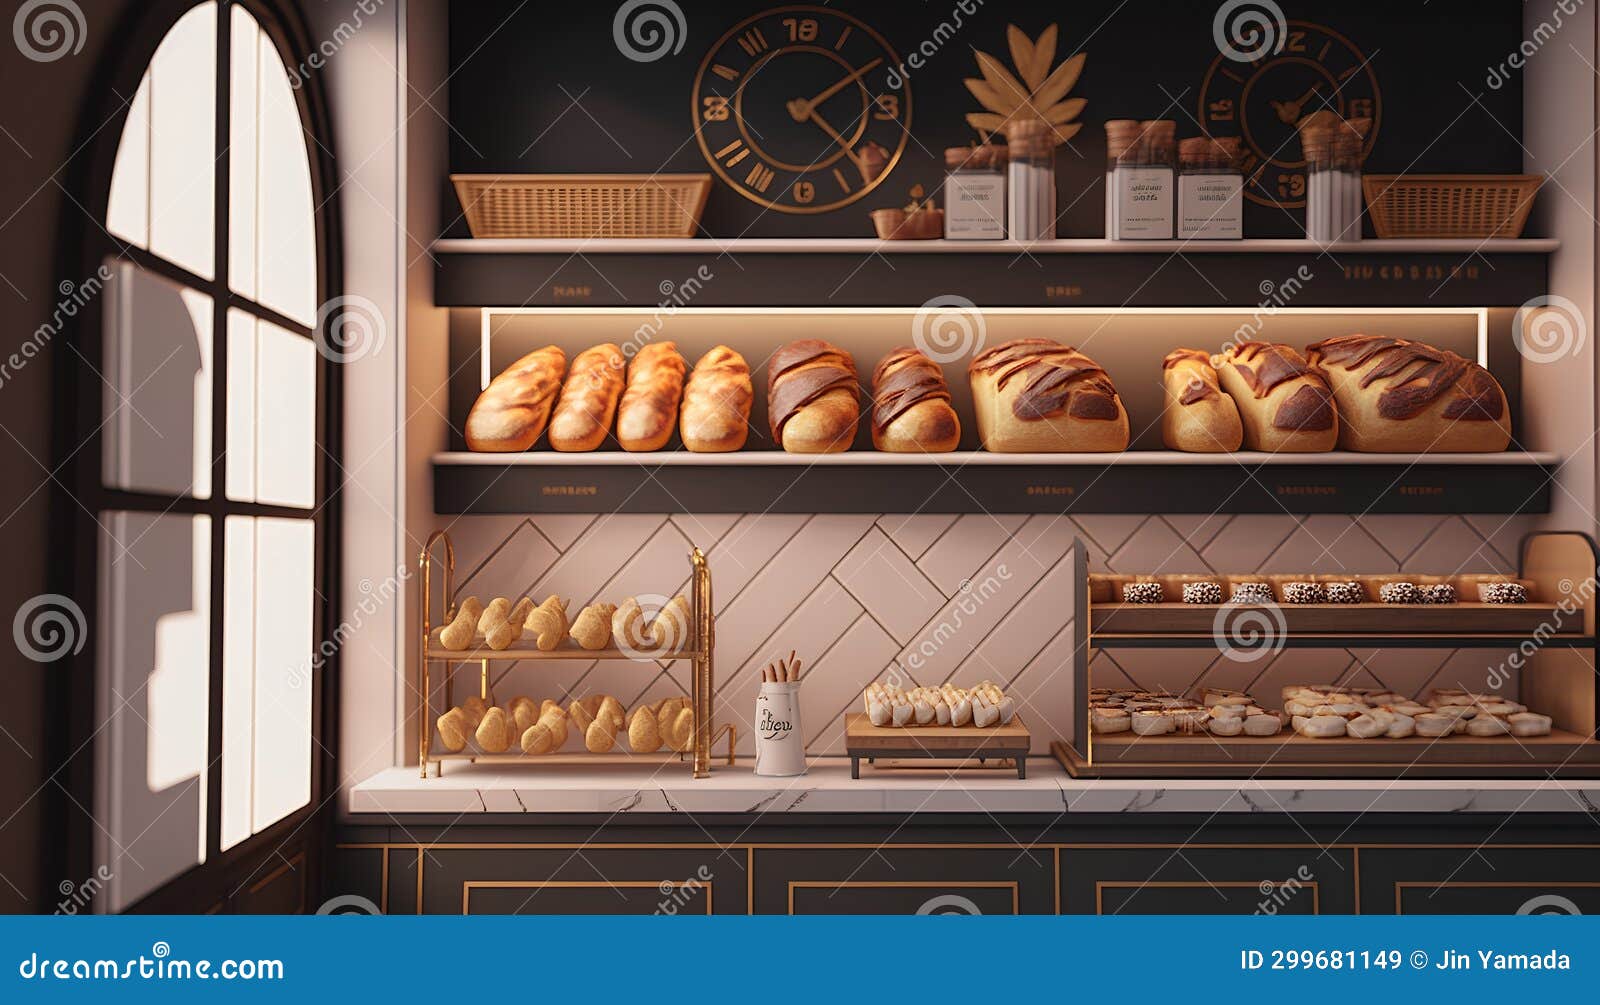 https://thumbs.dreamstime.com/z/d-rendering-bakery-shelf-bread-pastries-299681149.jpg